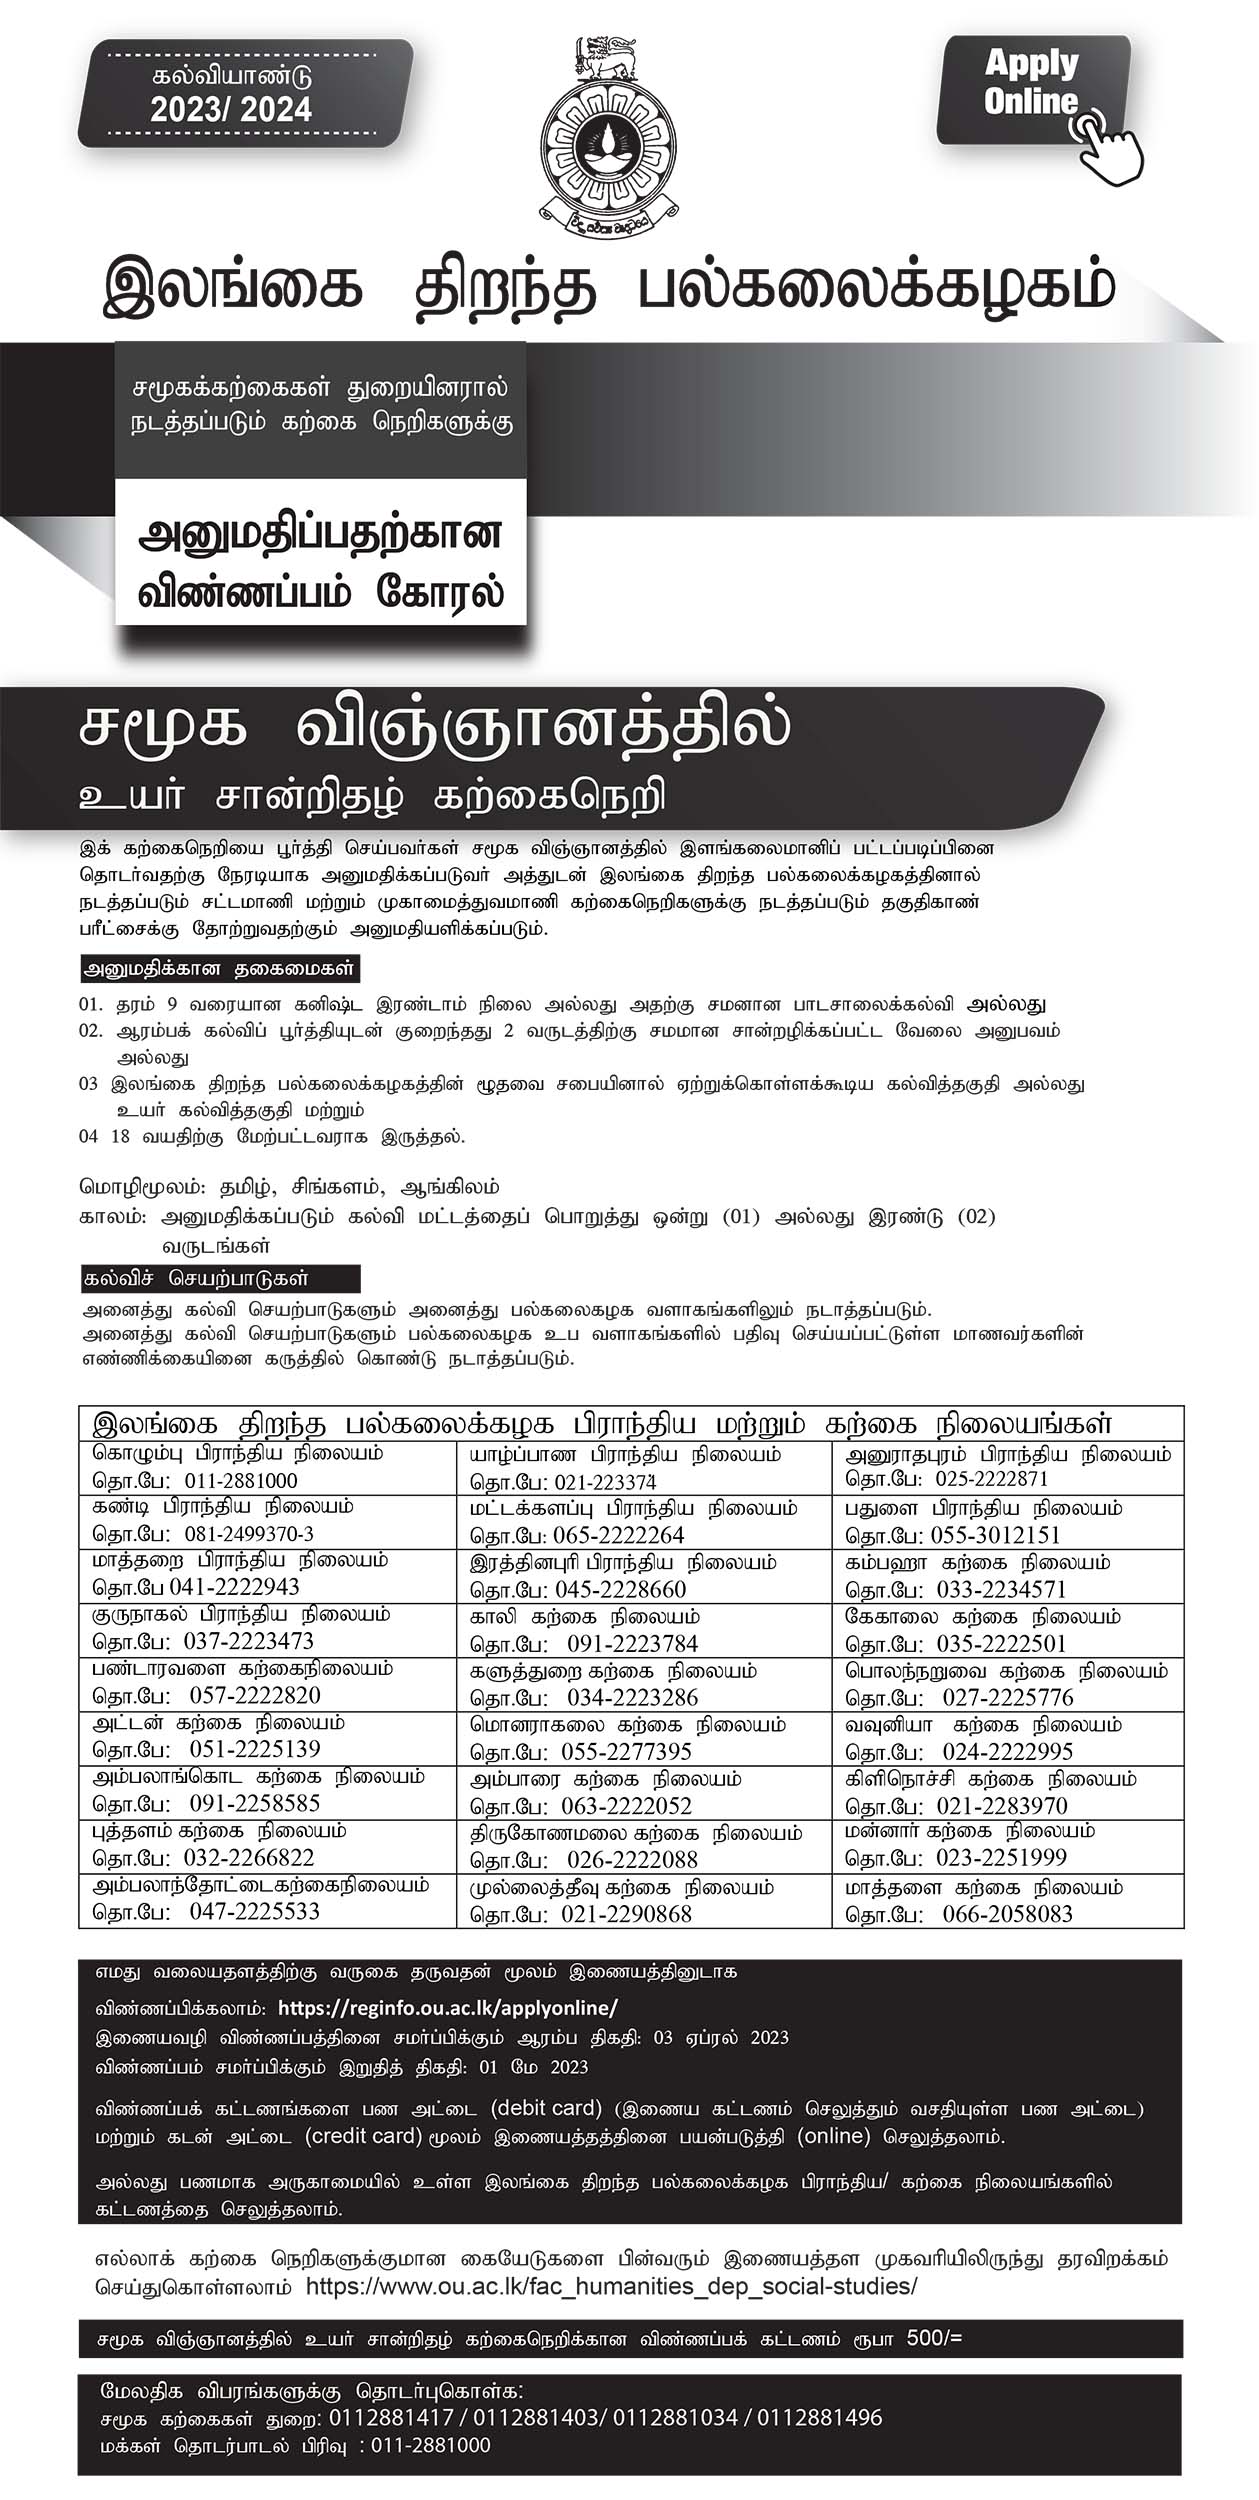 Advanced Certificate in Social Sciences 2023 - Open University of Sri Lanka